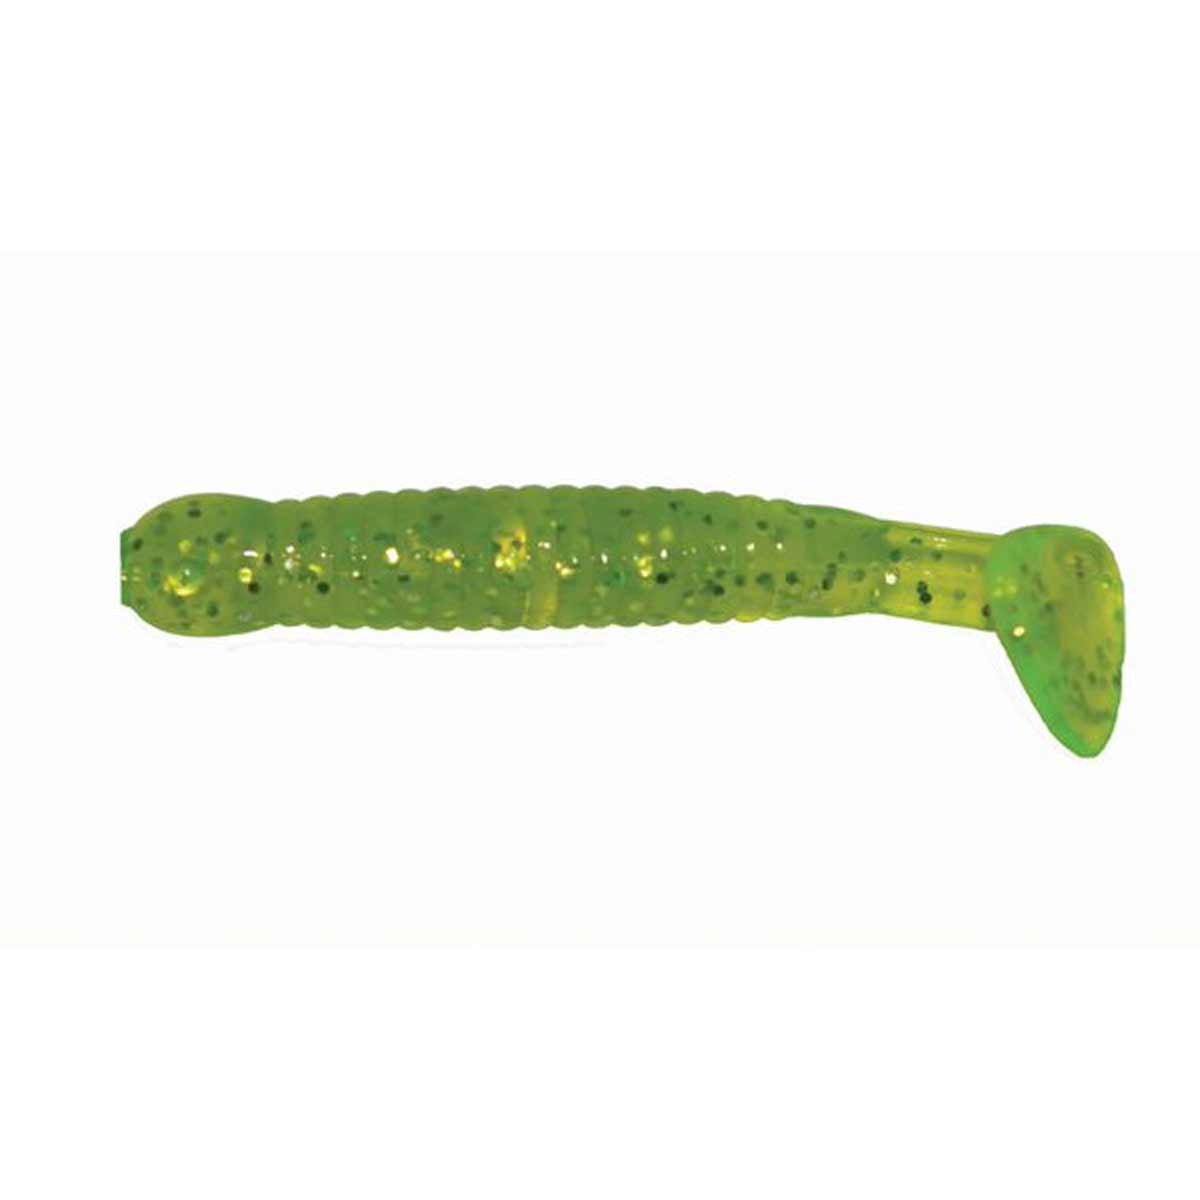 Paddle Tail Grub_Chartreuse Shine